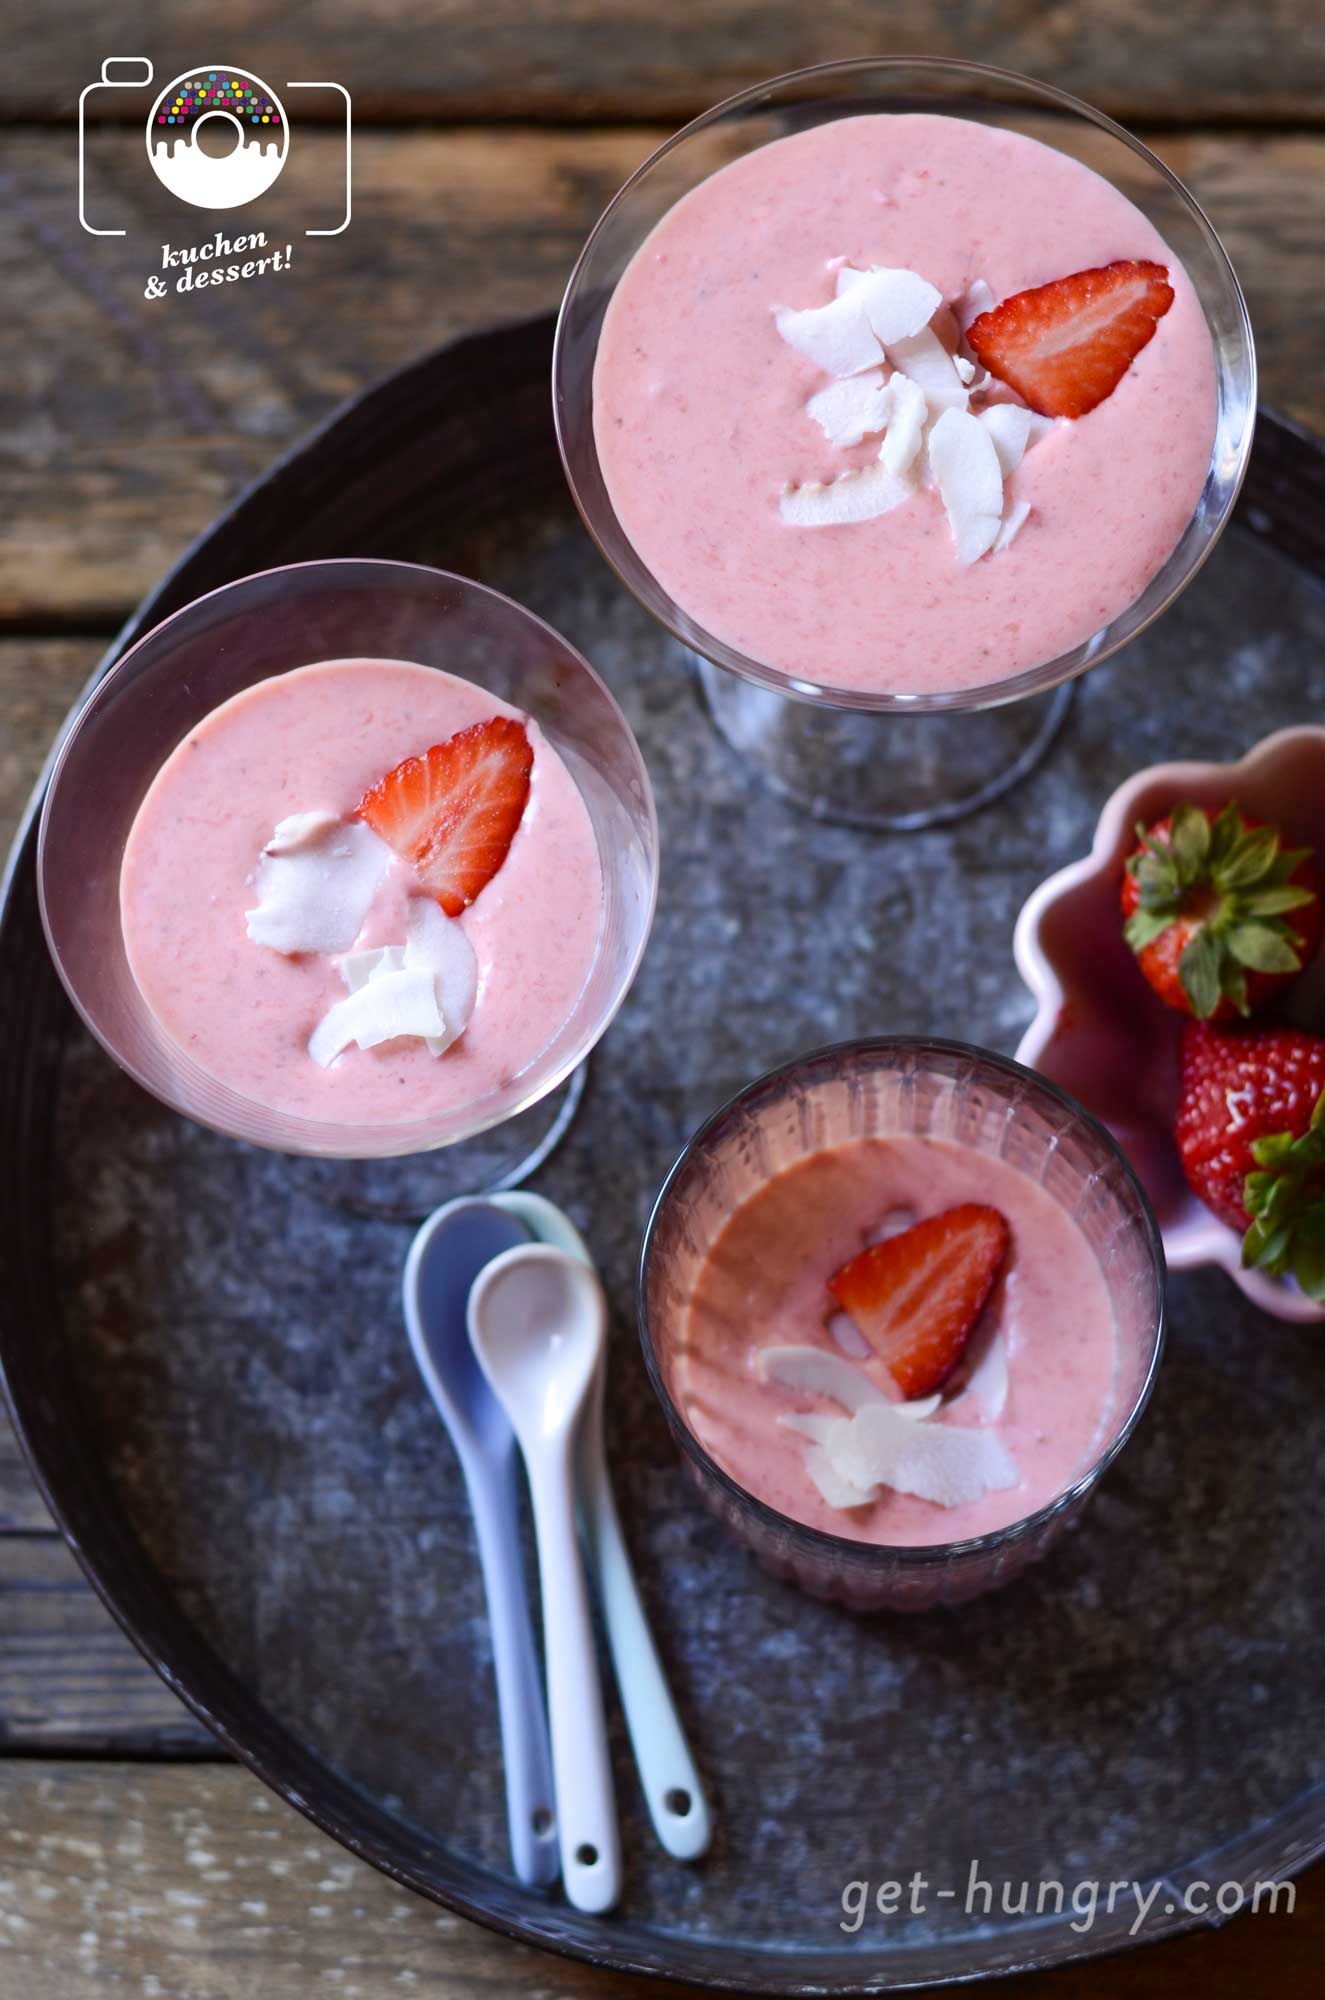 Erdbeercreme mit Tonkabohnen-Sahne — get hungry!